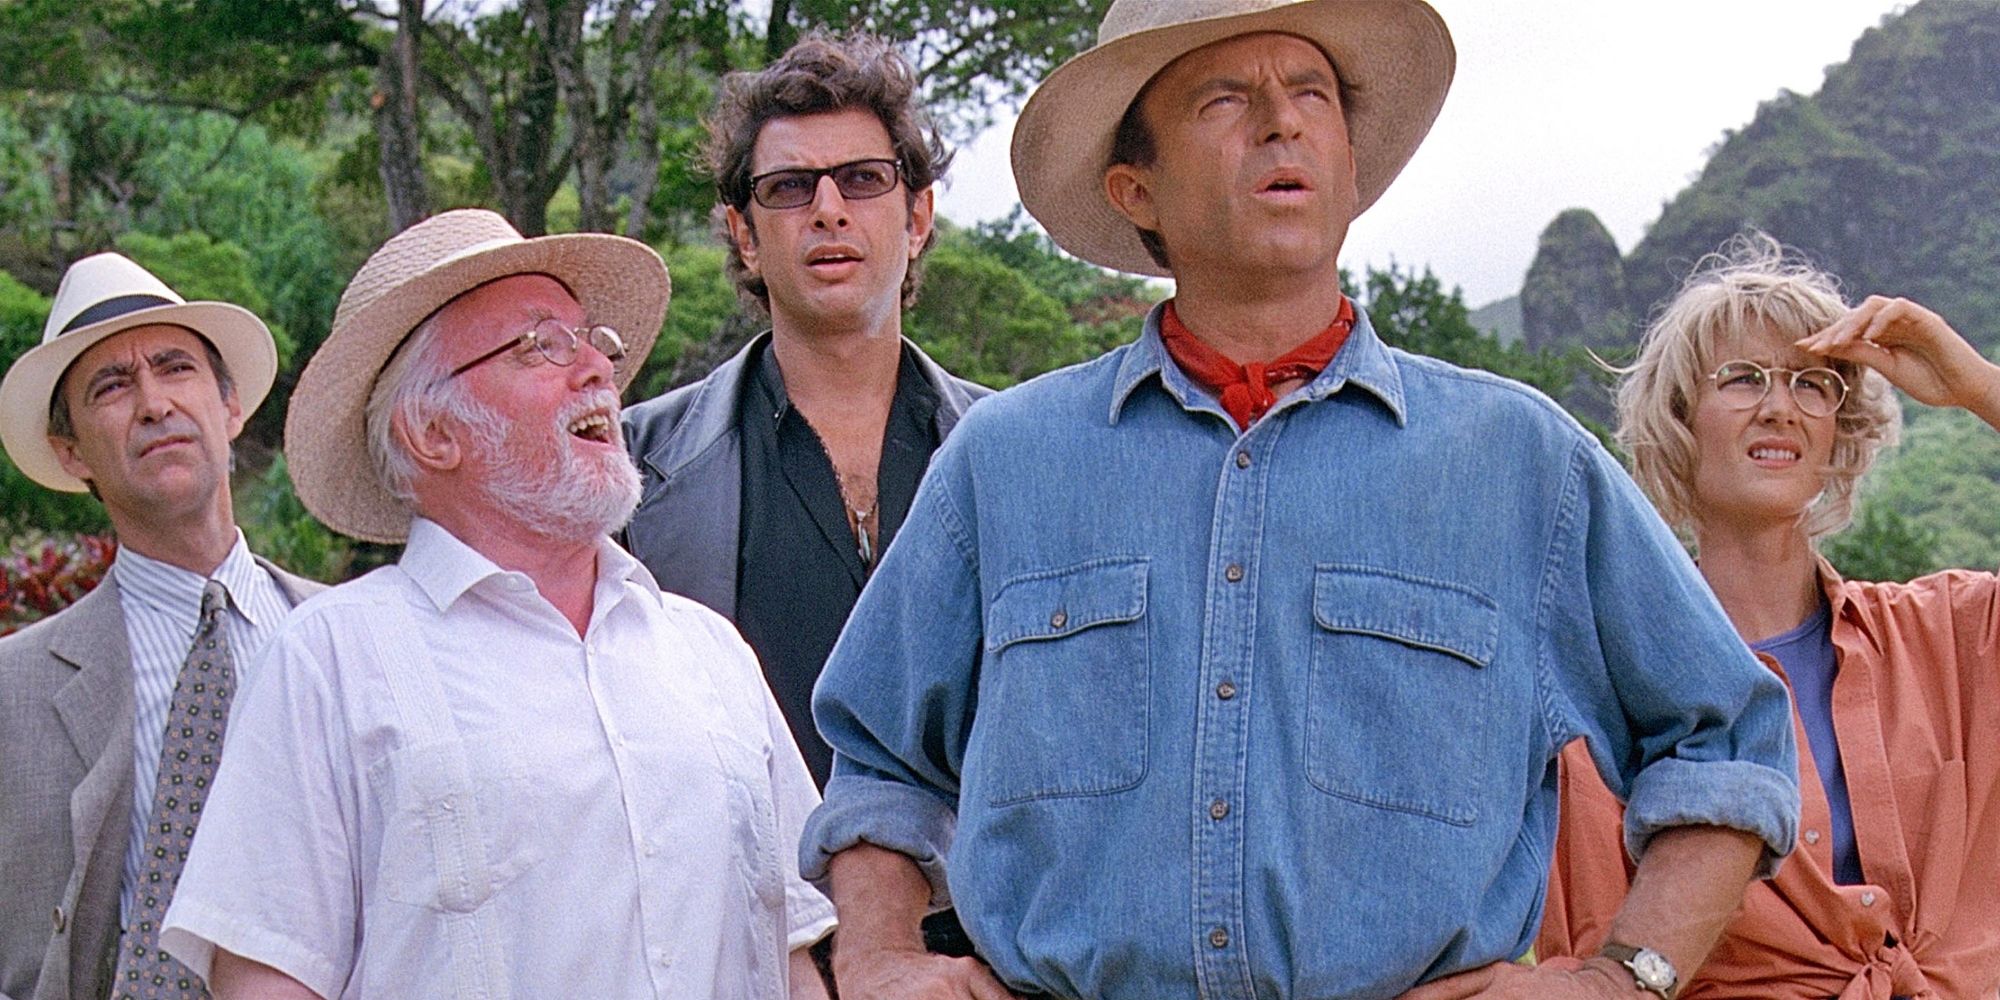 5 Ways Jurassic World Is Better Than The Original Trilogy (& 5 Ways Jurassic Park Is Superior)